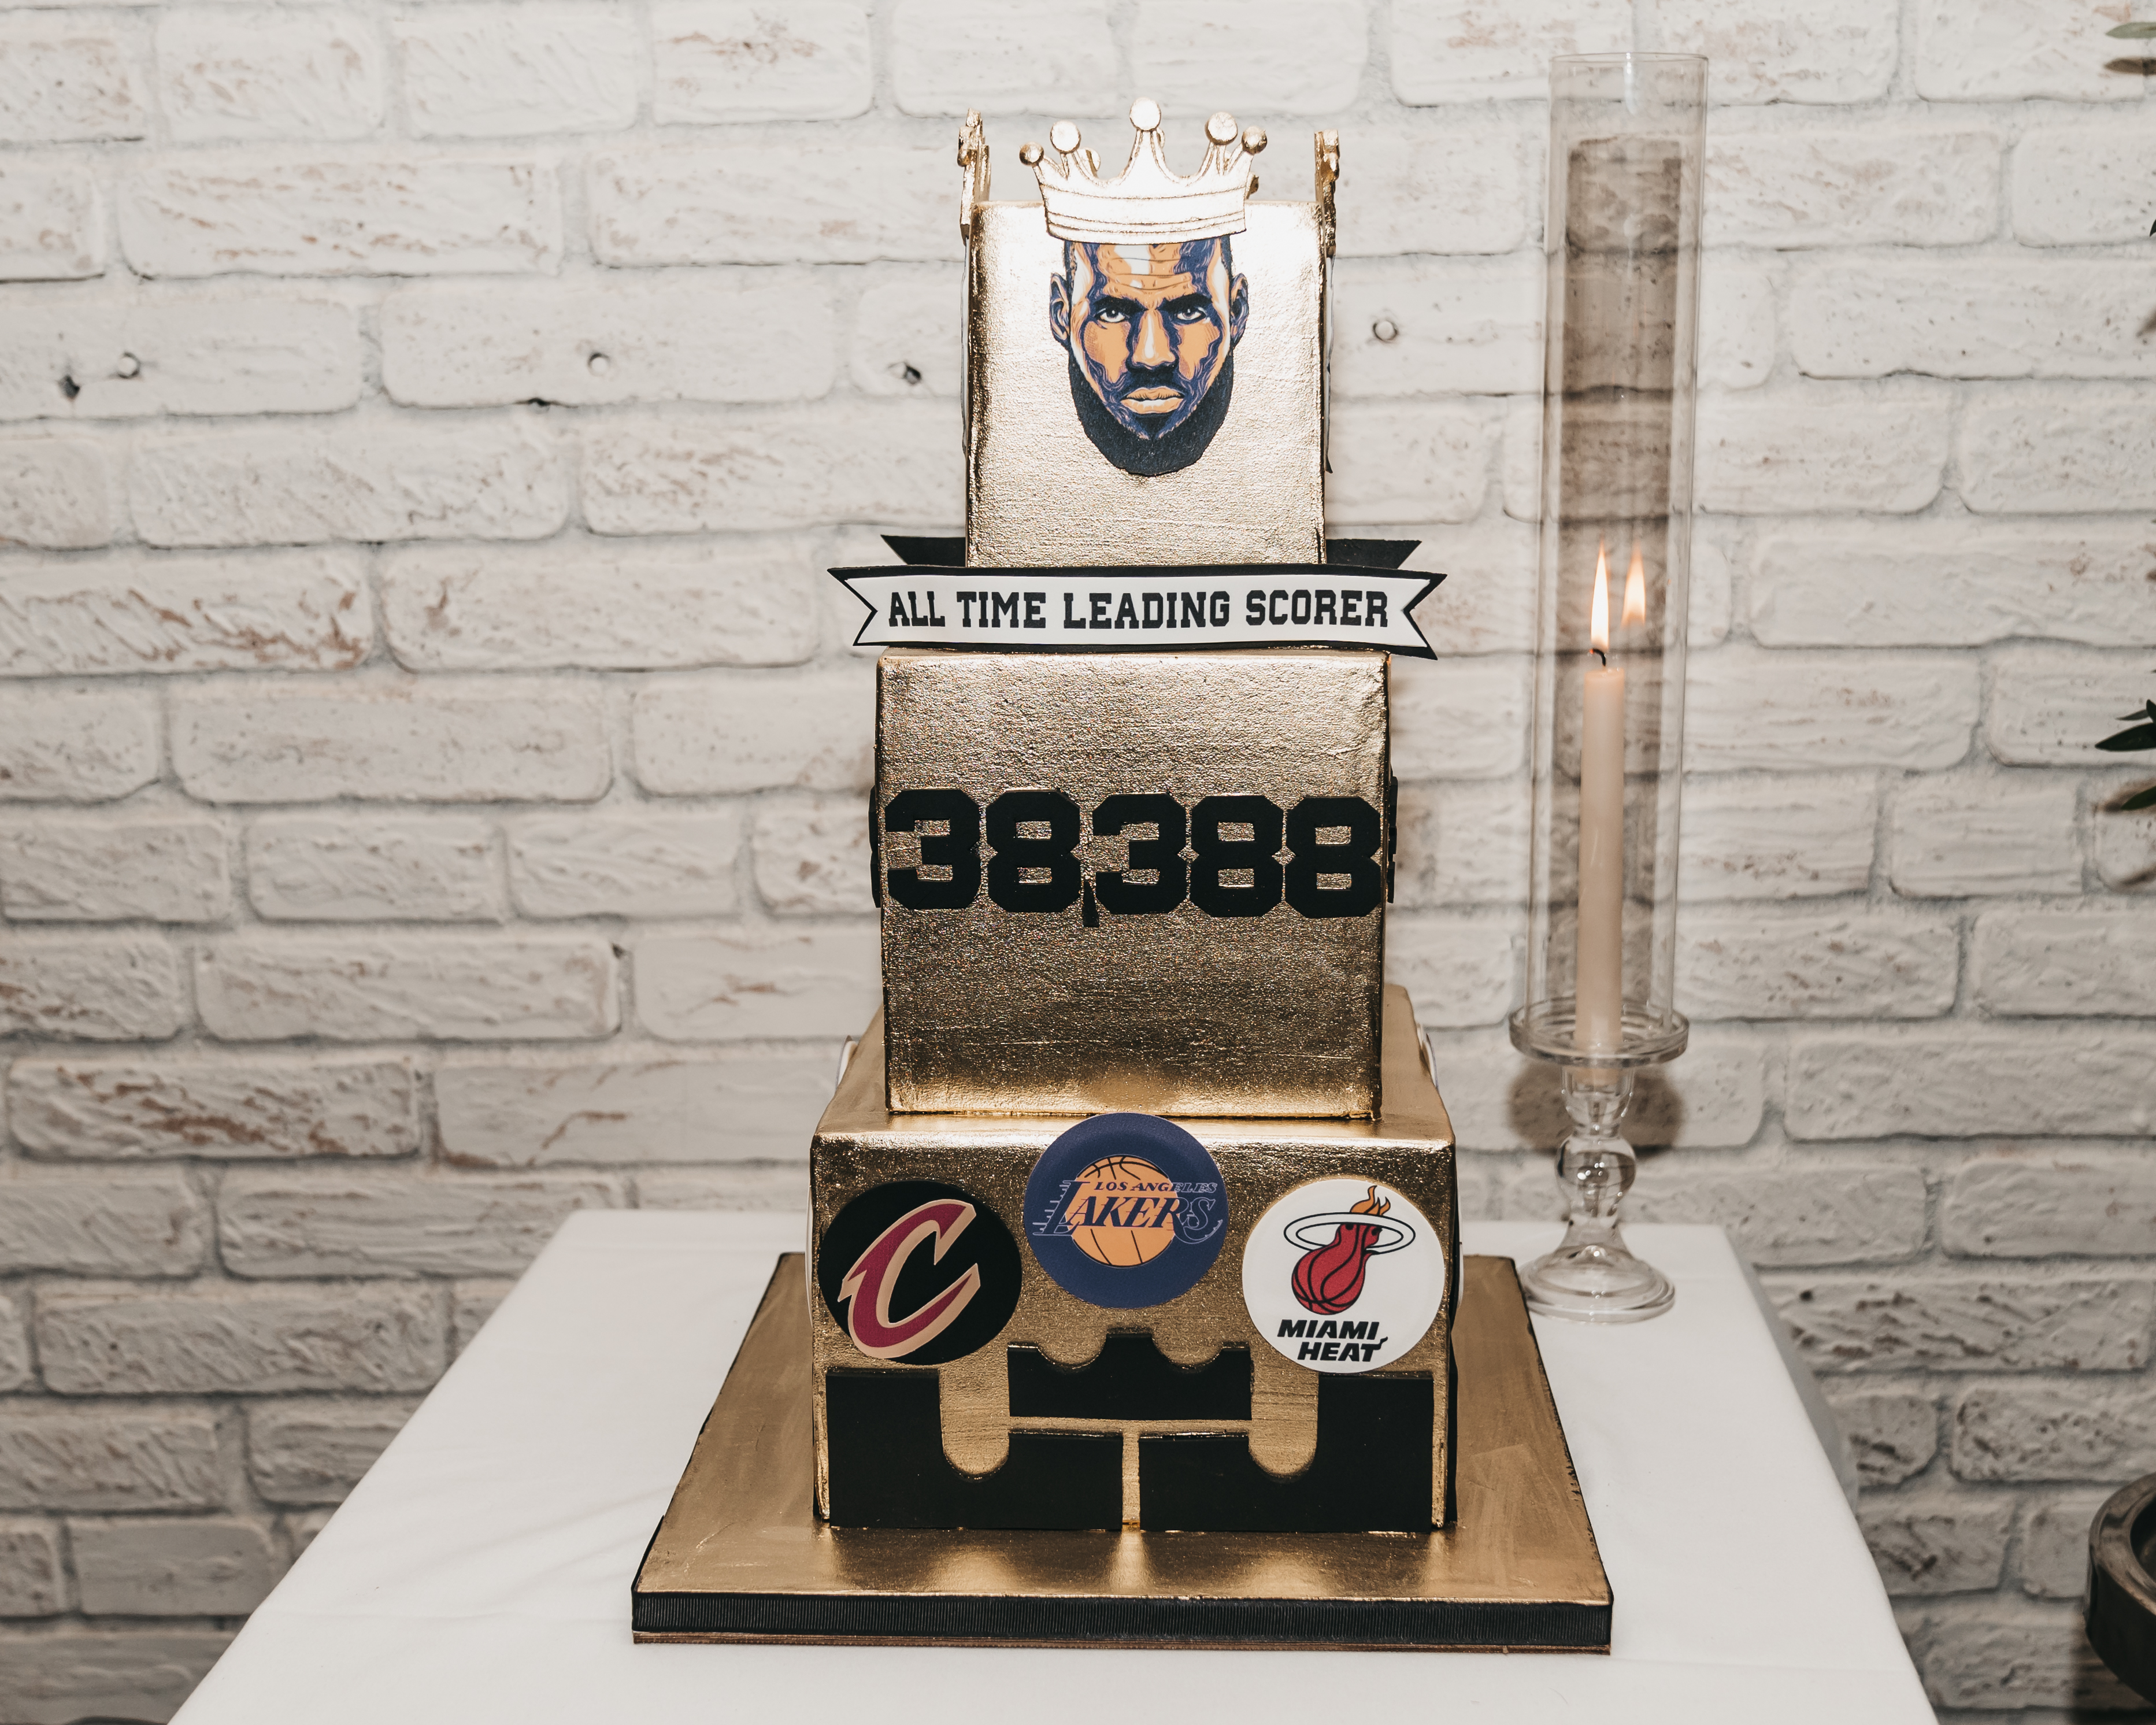 LeBron James record-breaking celebration assets